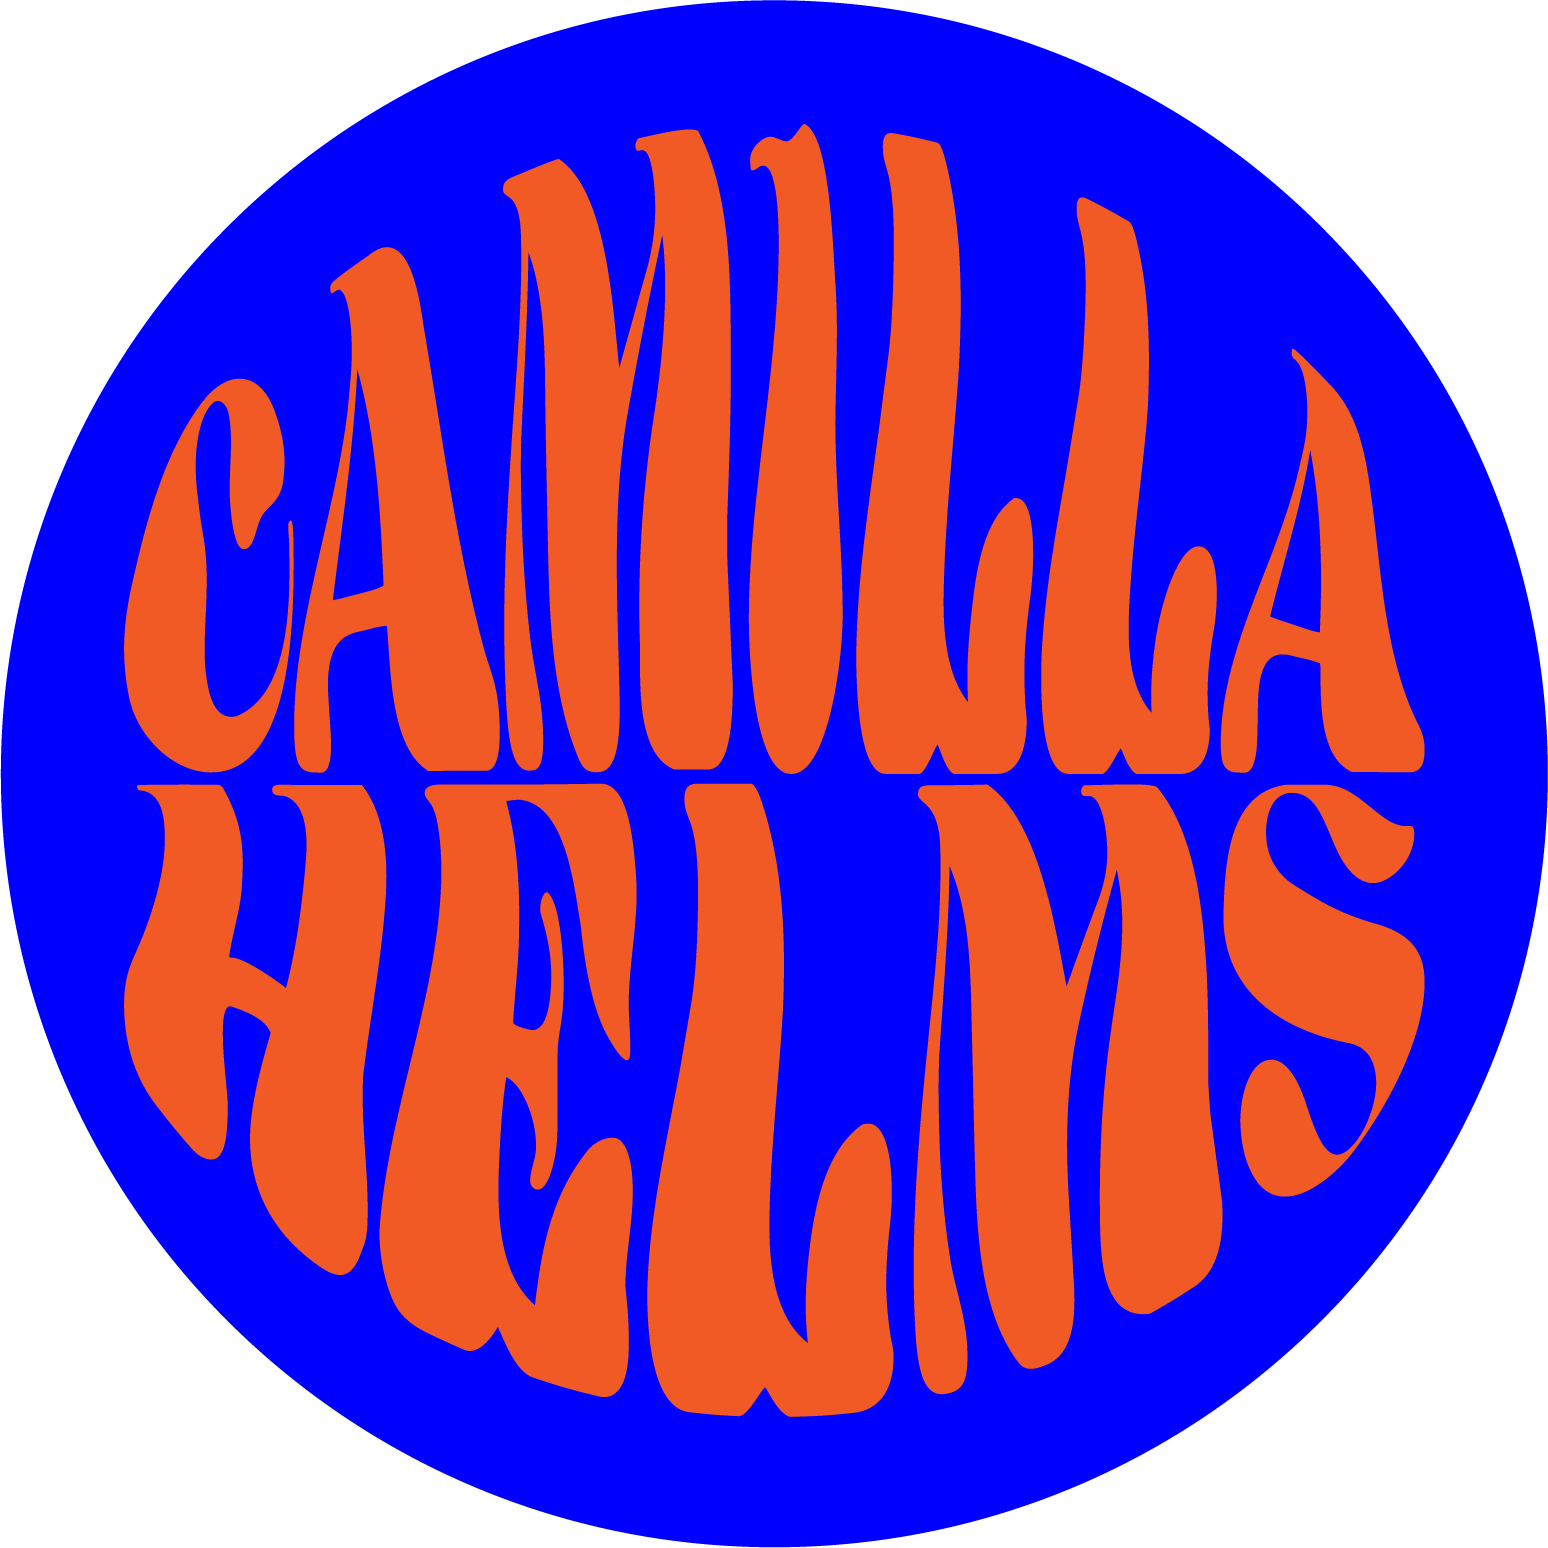 Camilla Helms